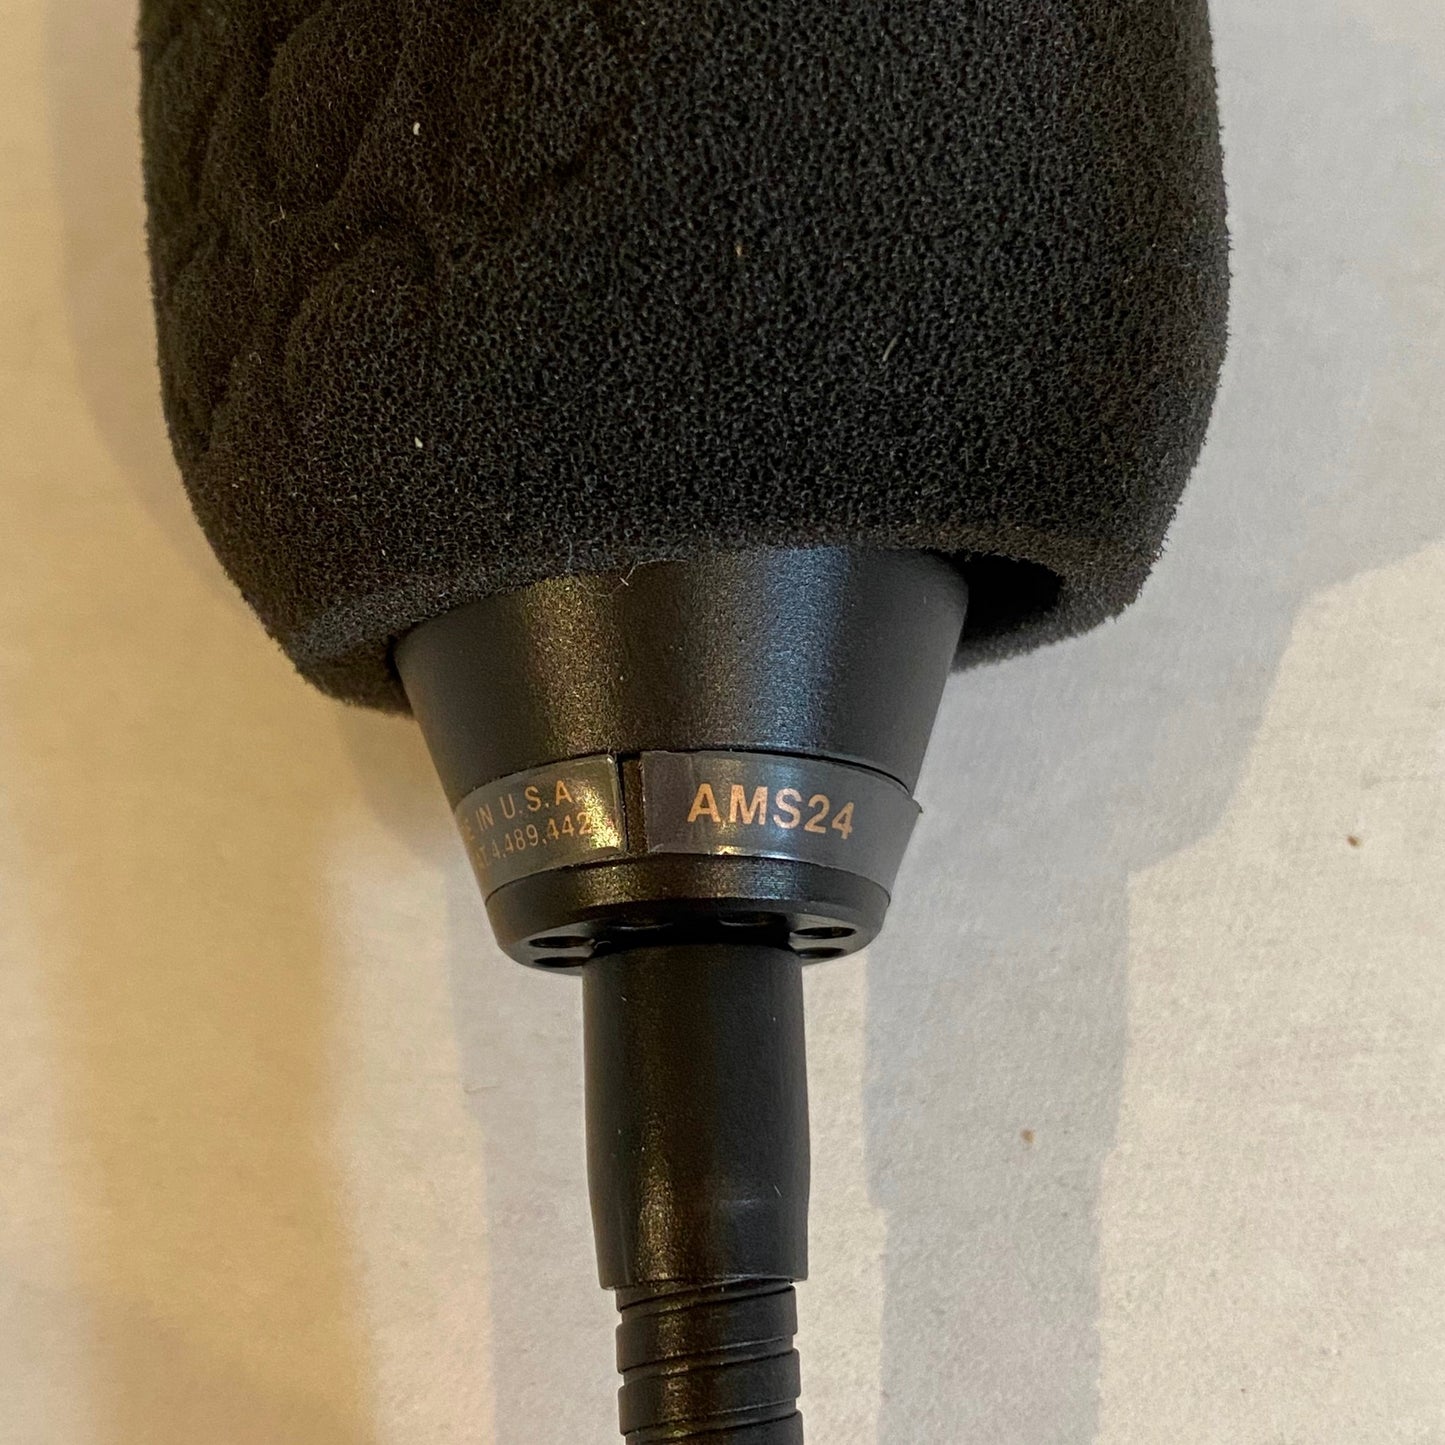 Shure 15" Black Gooseneck Microphone with 3.5 Audio Jack - AMS24